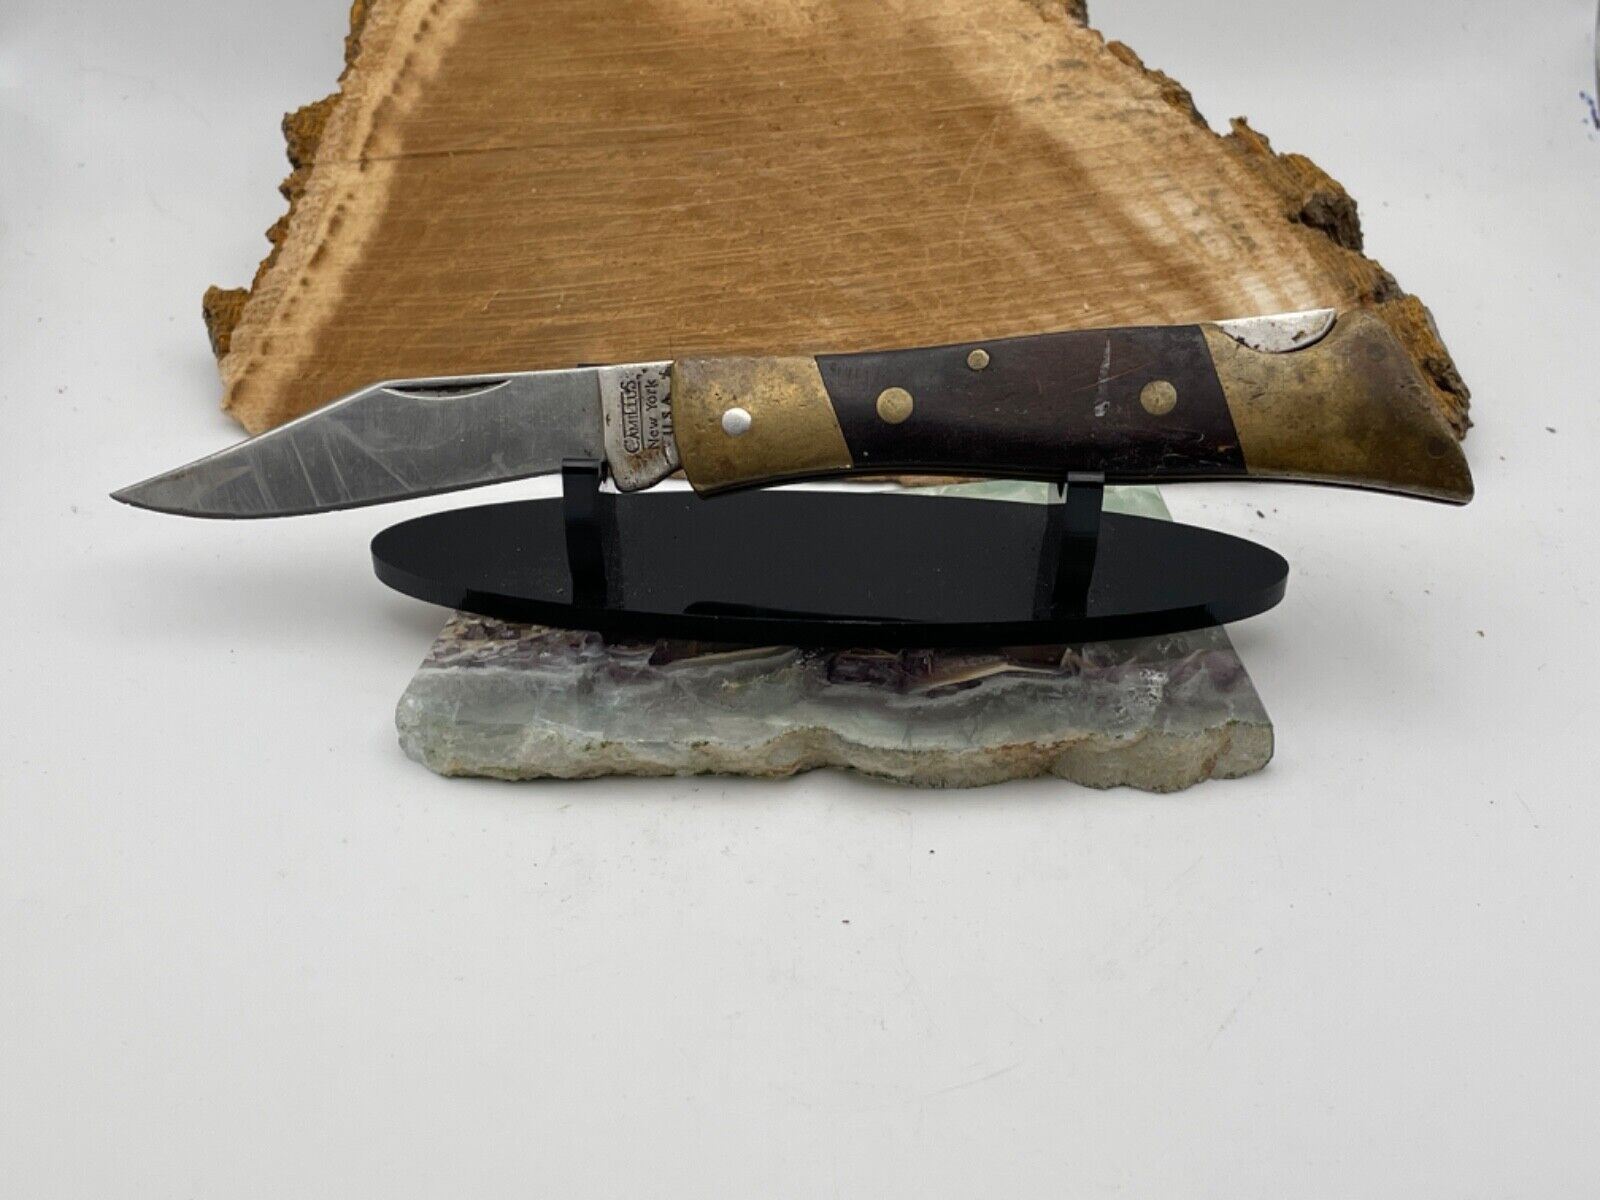 Vintage Camillus Sword Brand #3 midsized single blade folder wood/brass--1437.24